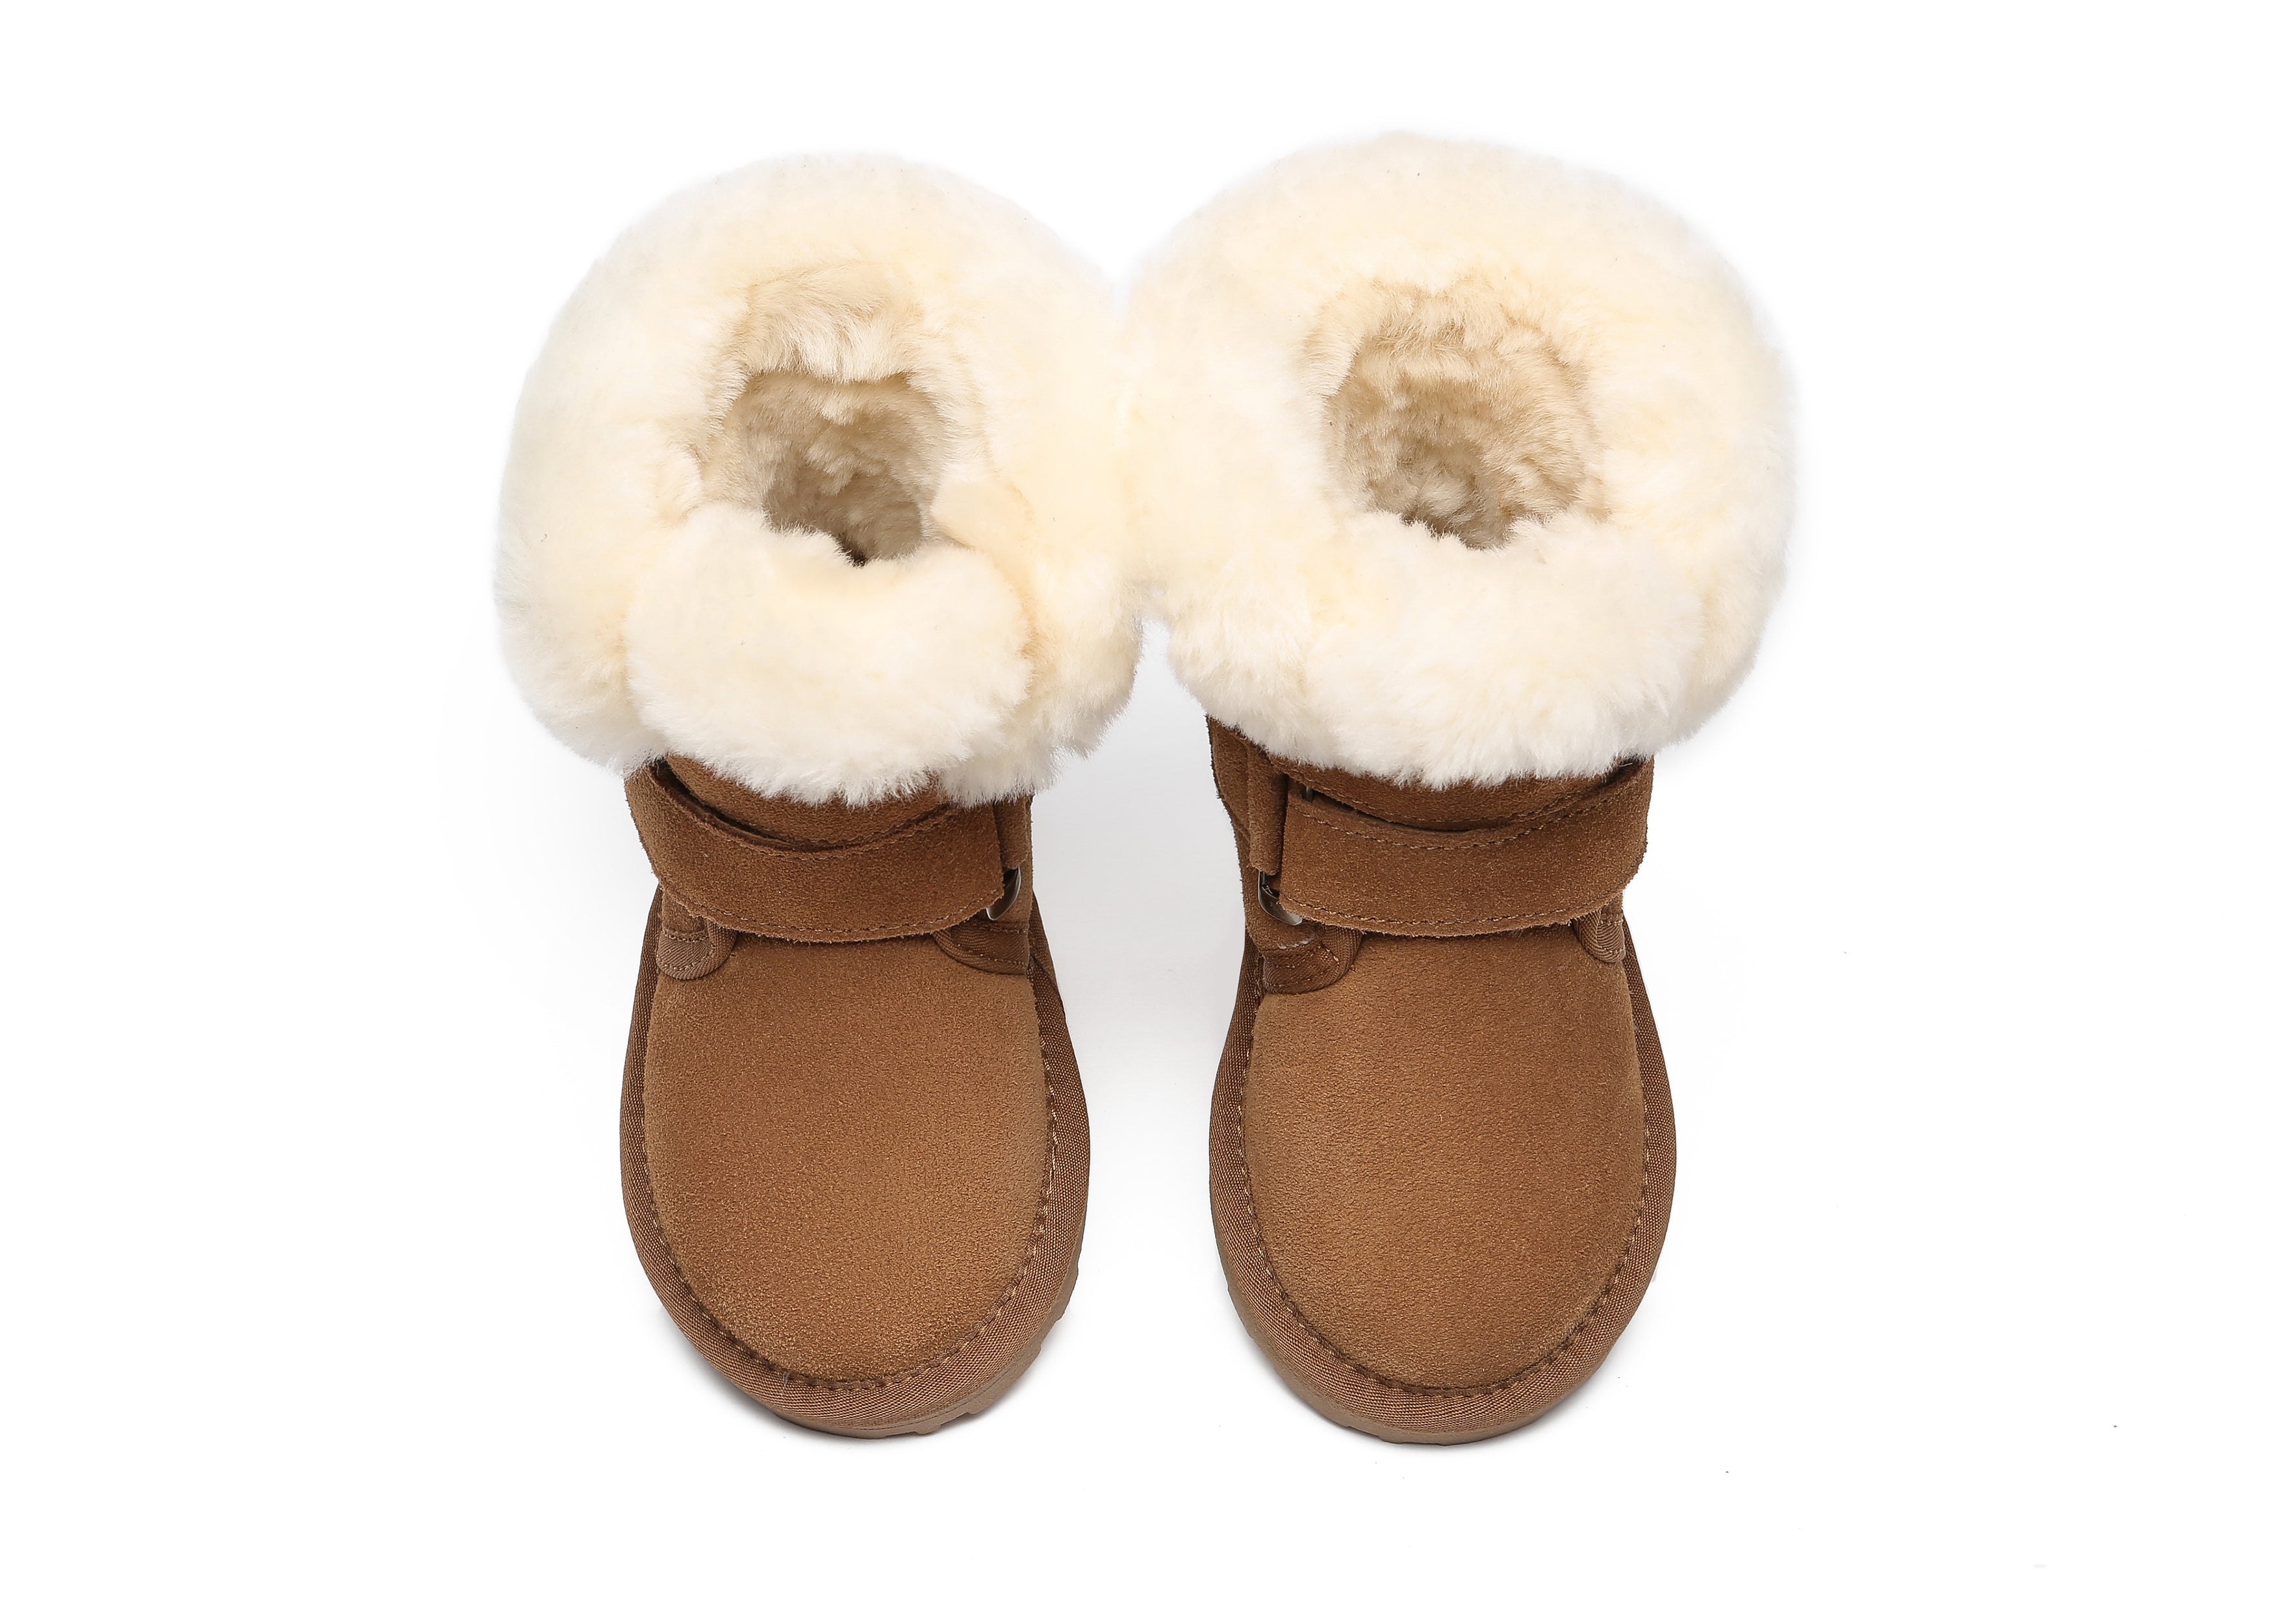 EVERAU® Double Hook And Loop Strap Sheepskin Boots Kids Nordic